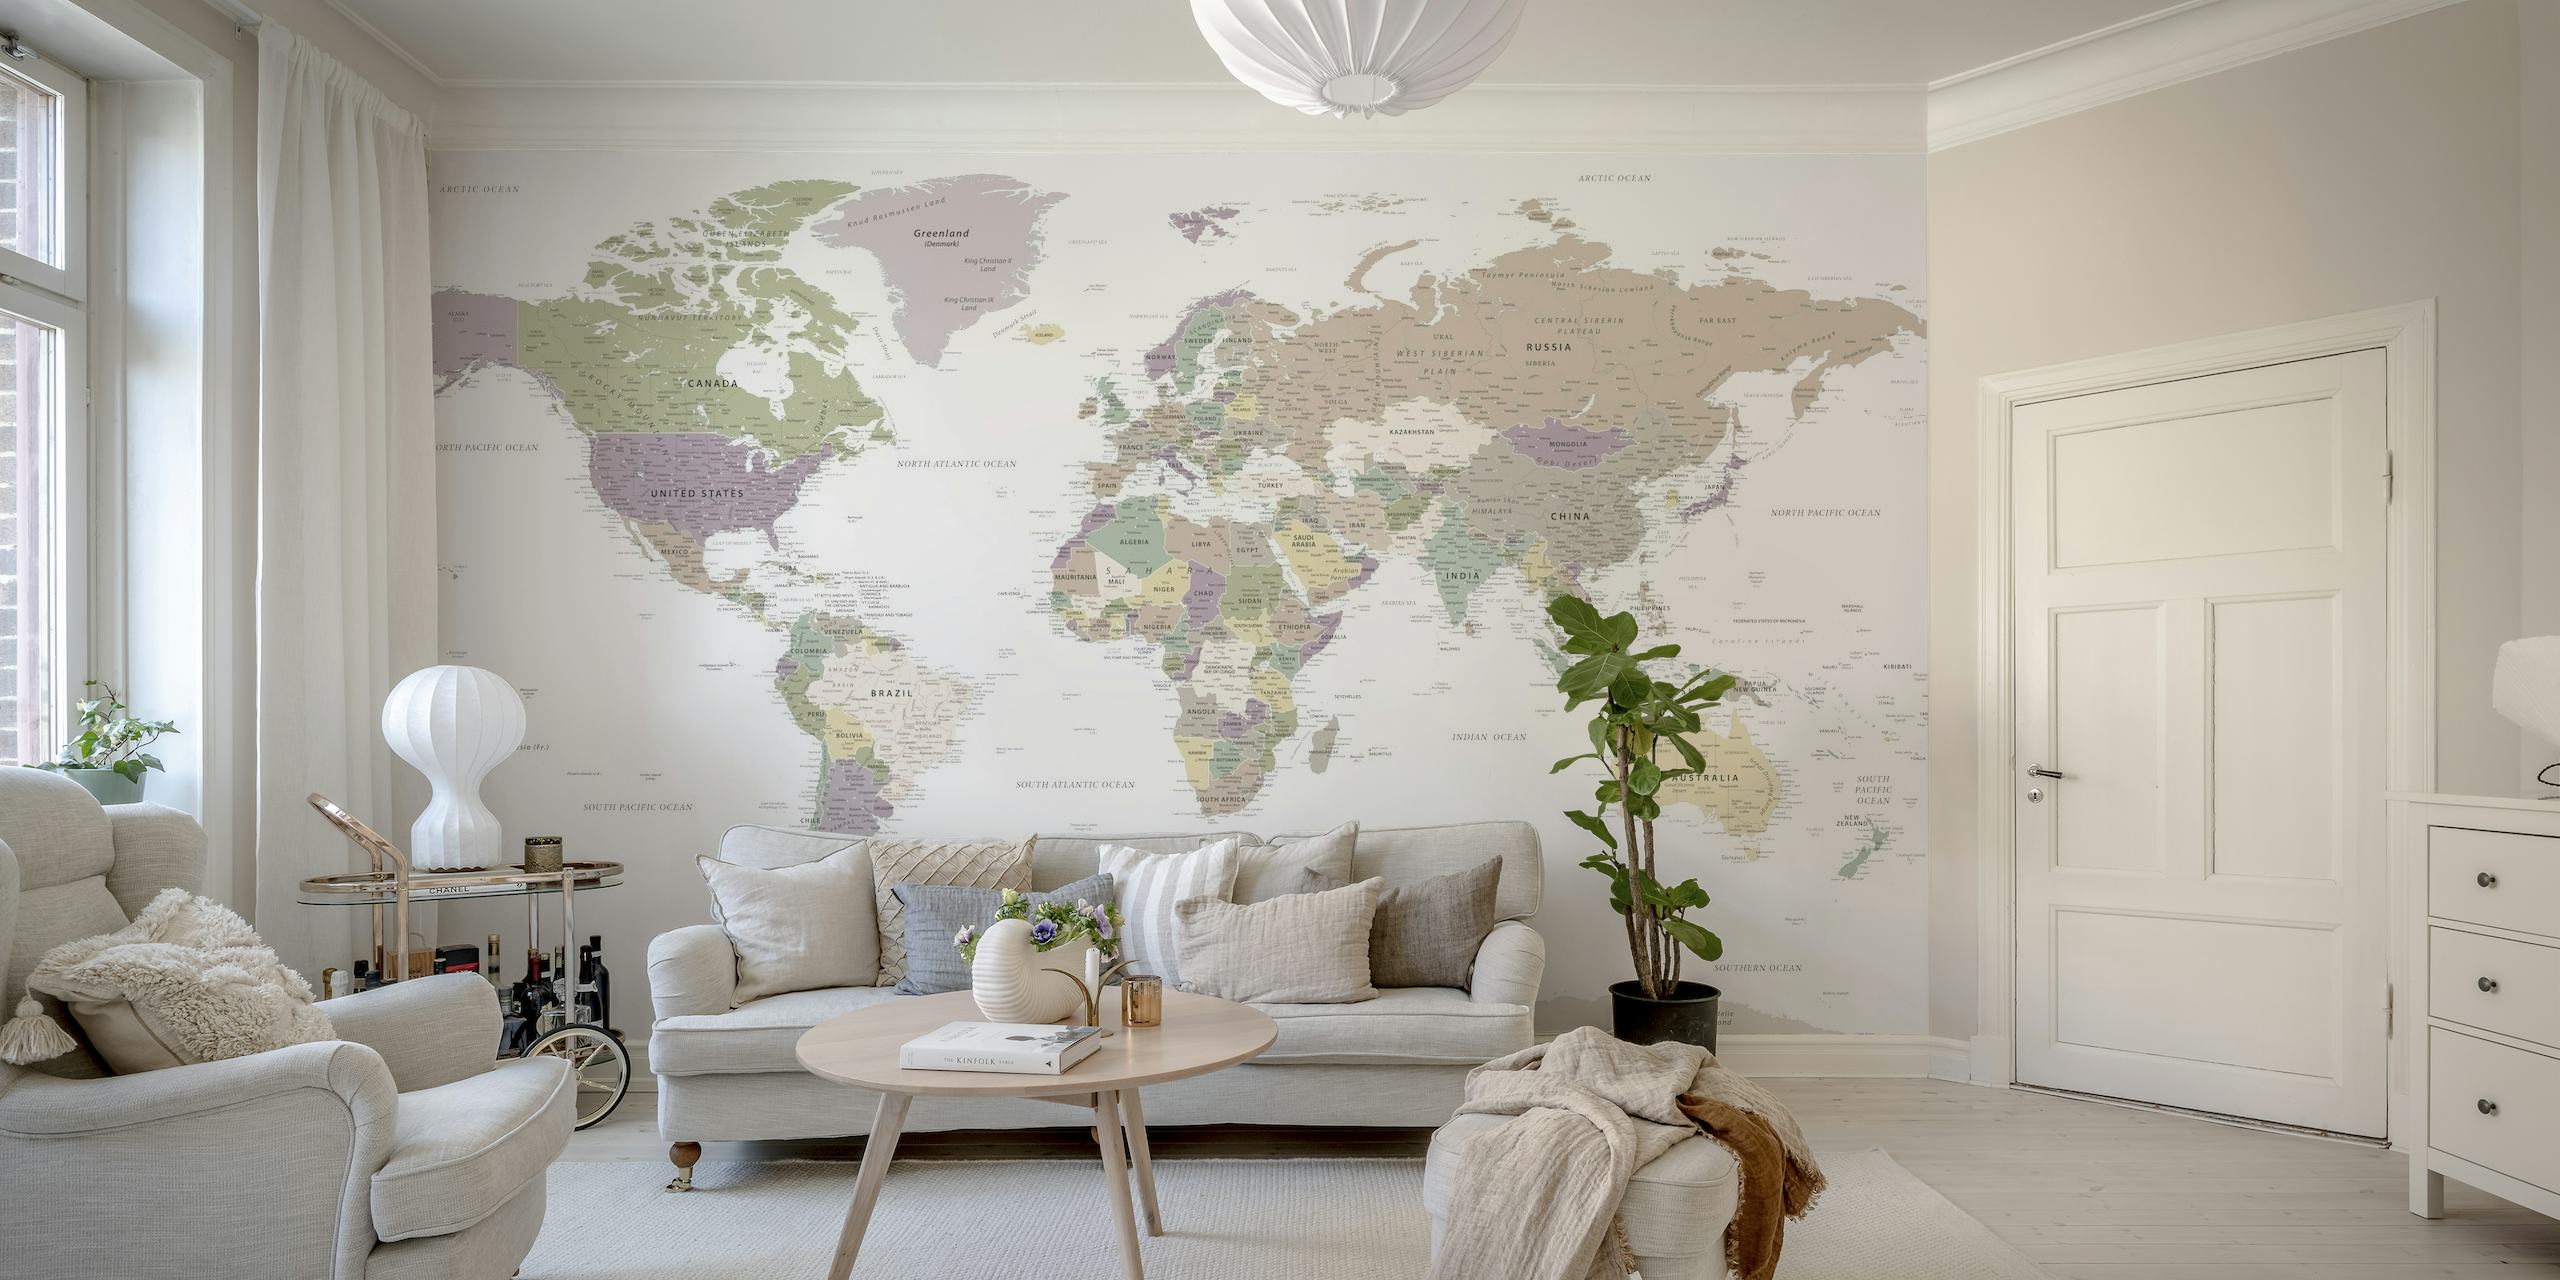 Detailed World Map papel pintado